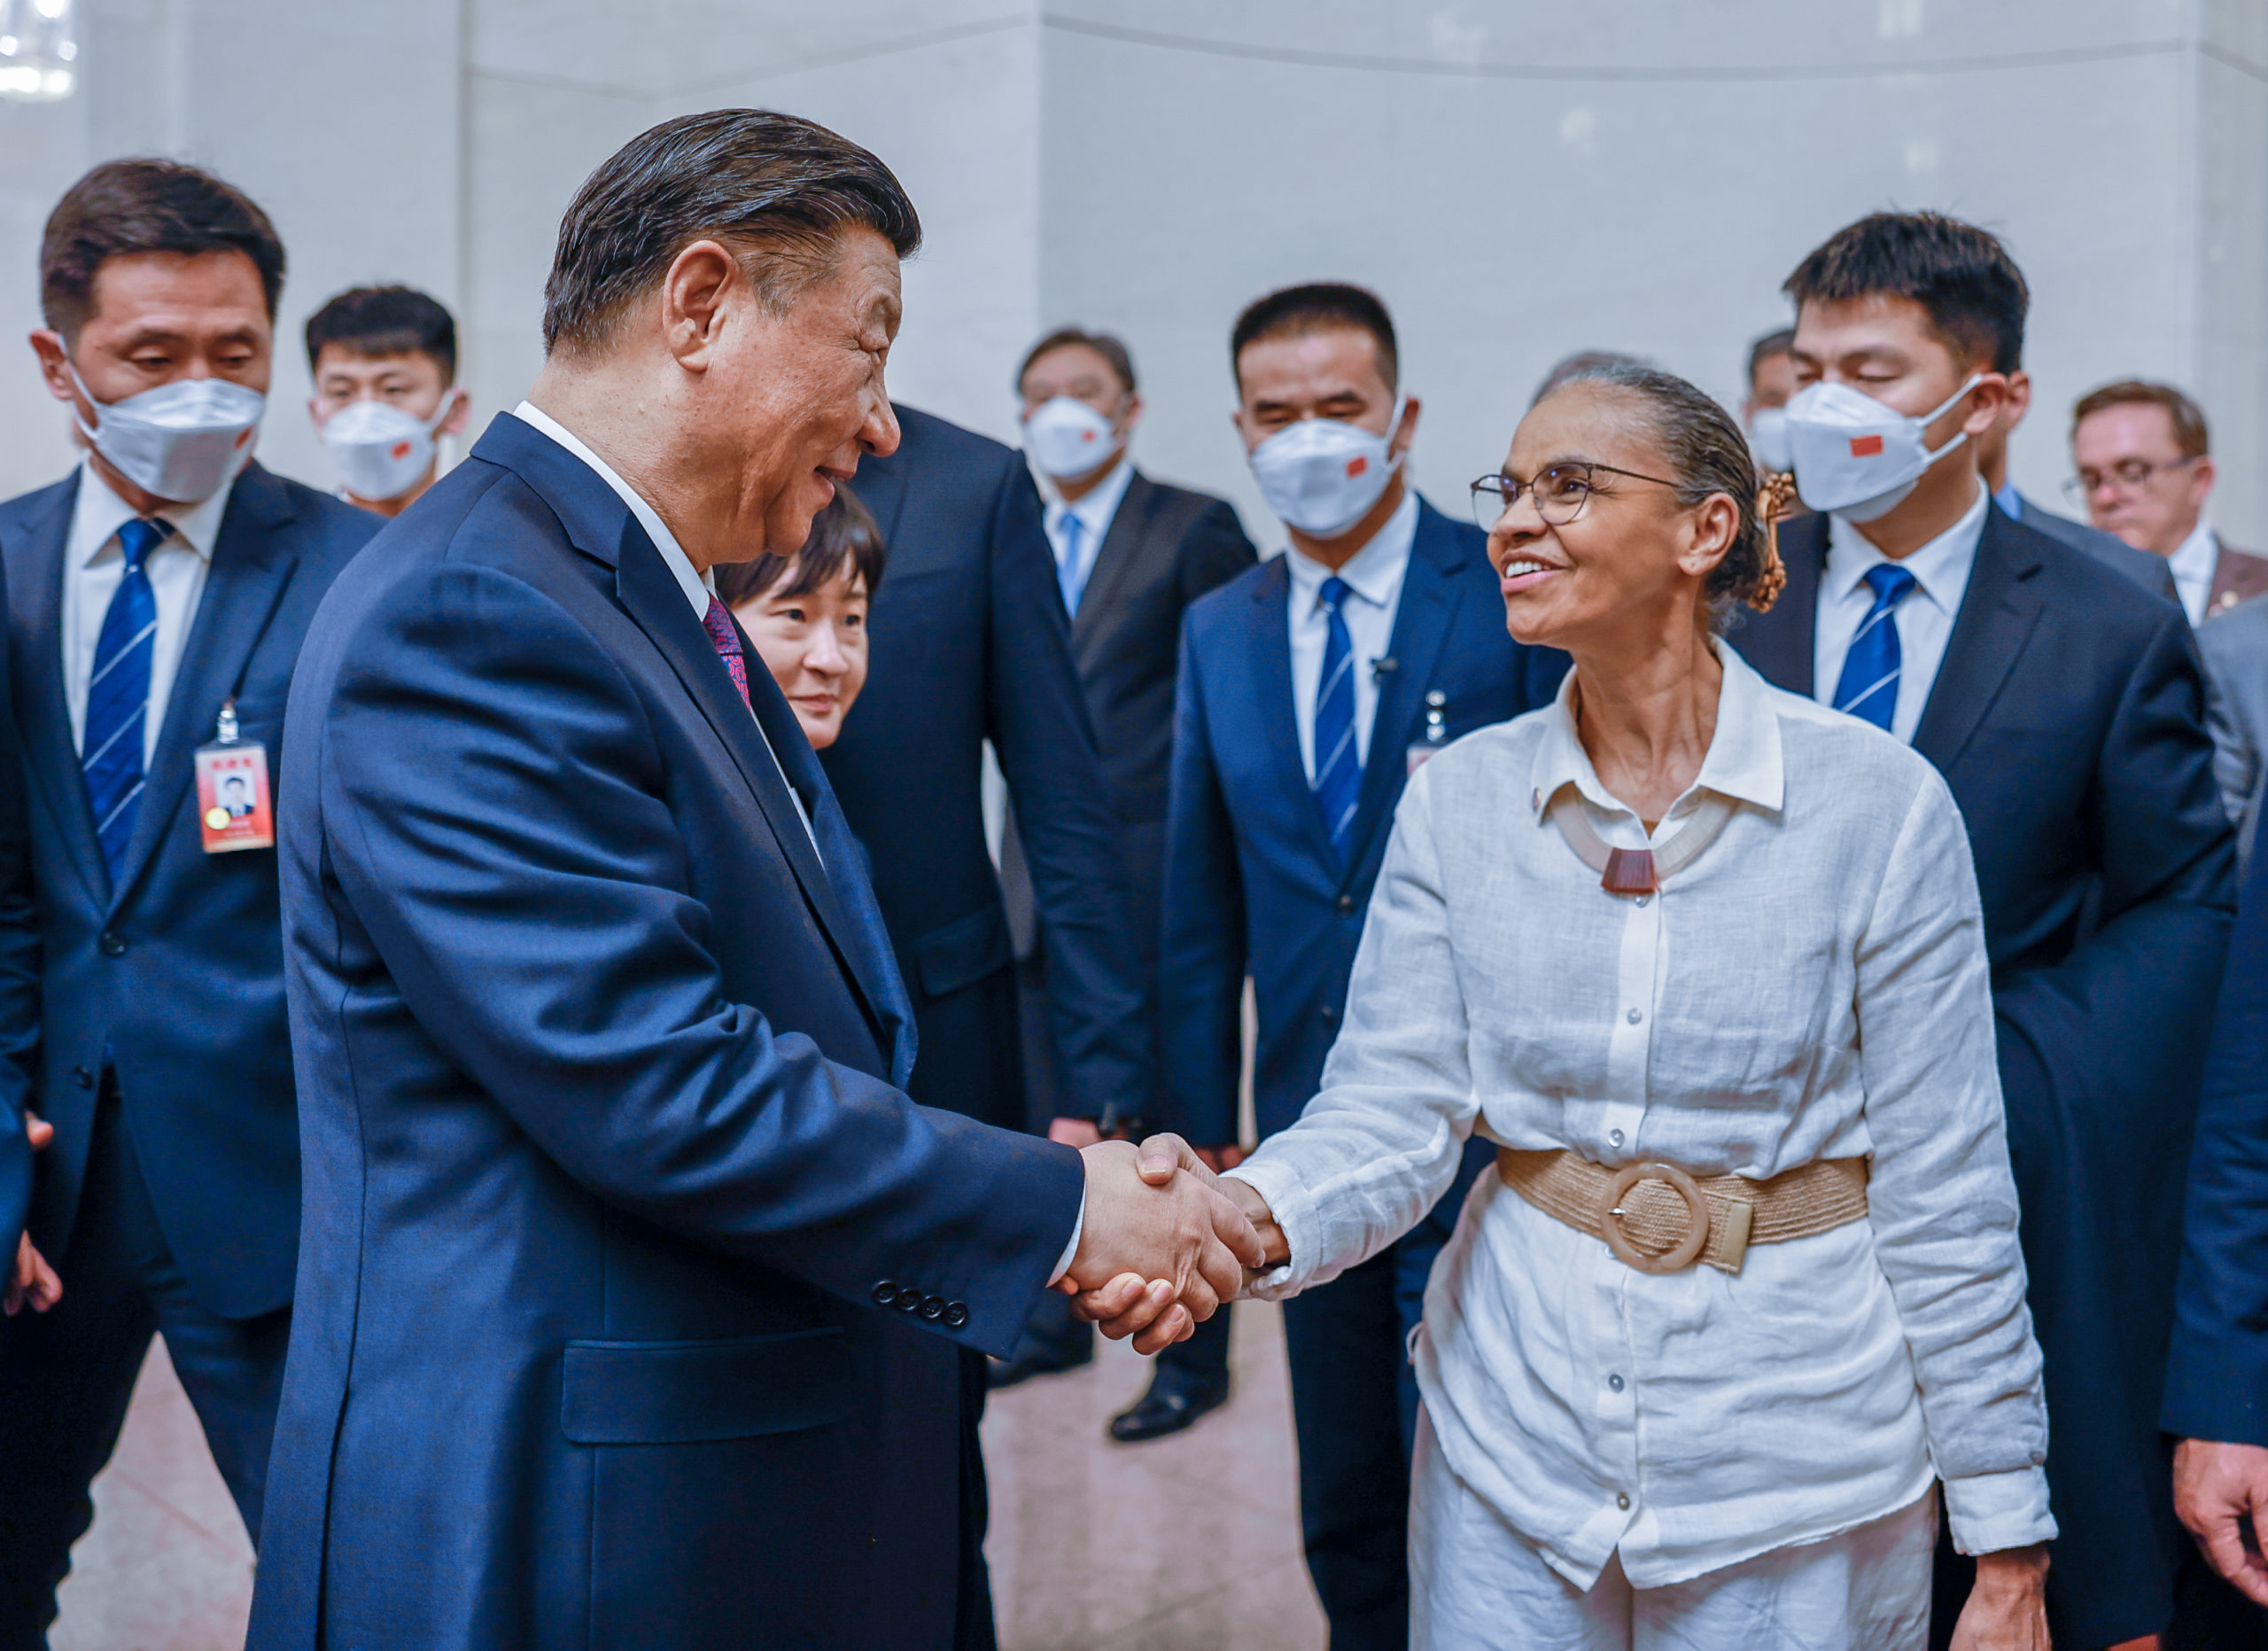 Marina Silva and Xi Jinping handshake